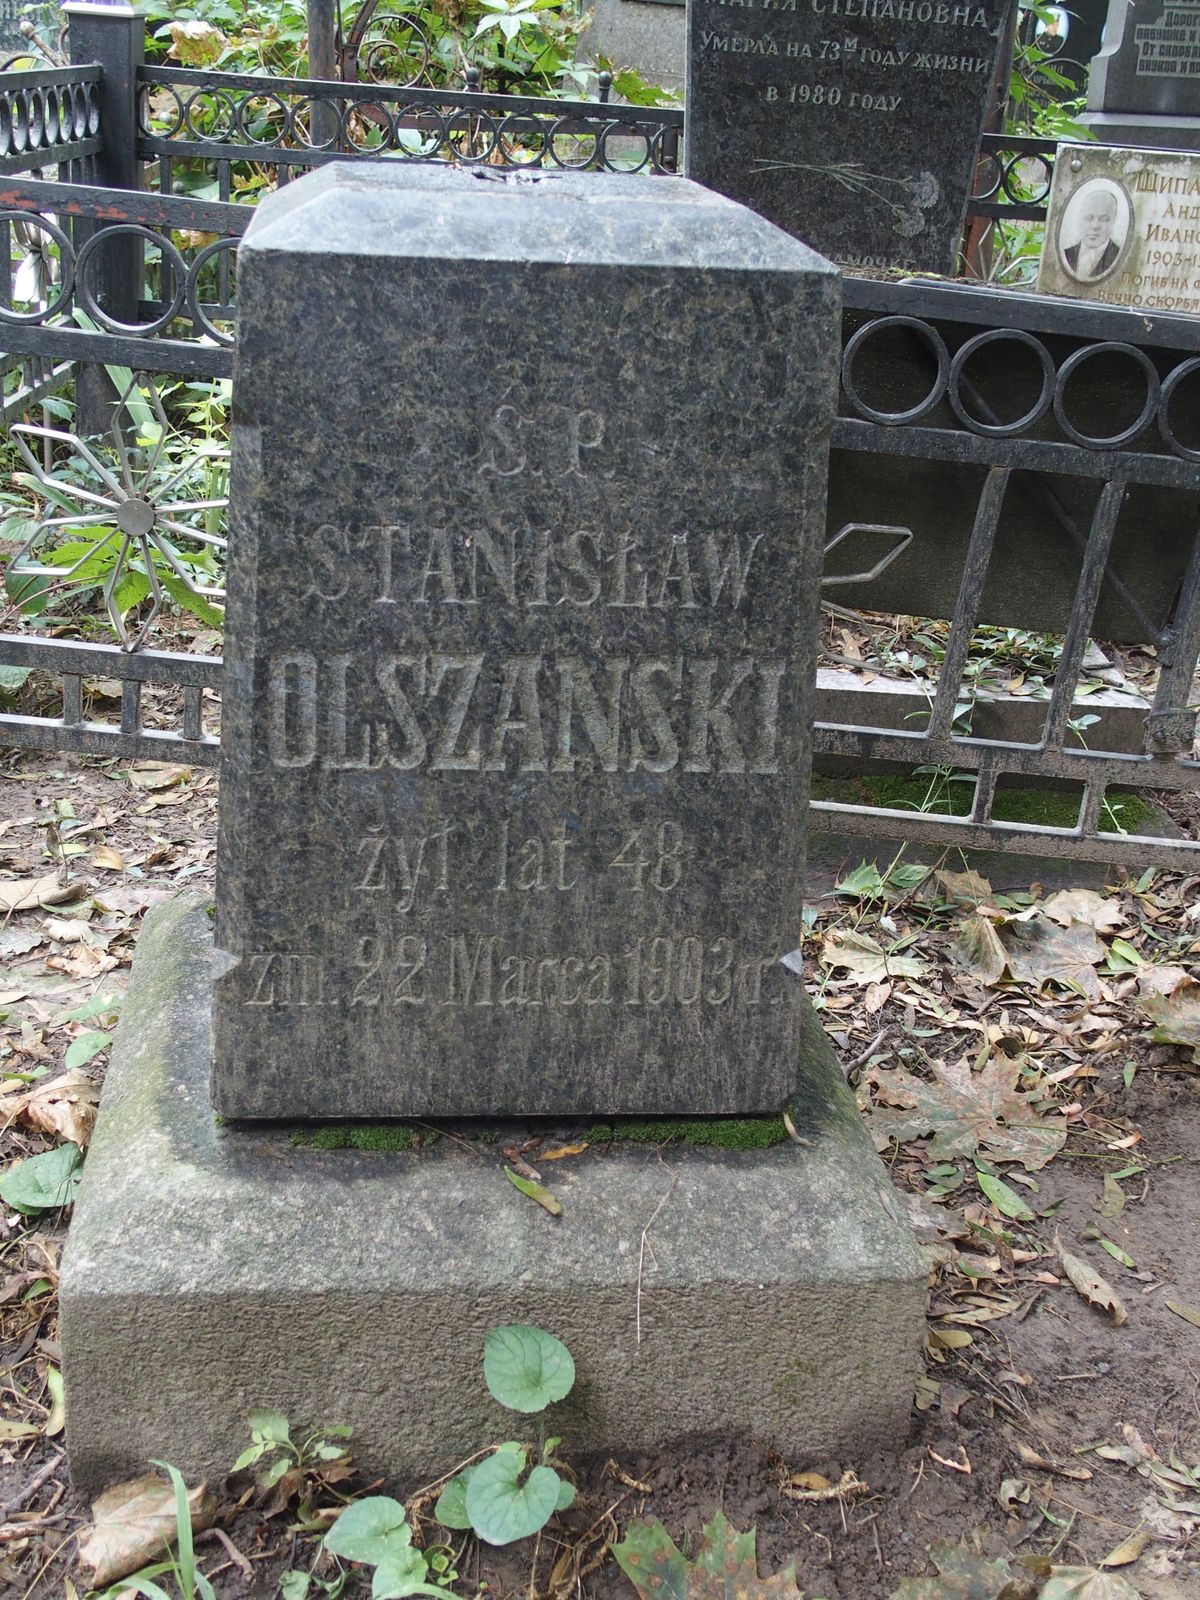 Tombstone of Stanislav Olshansky, Bajkova cemetery, Kyiv, as of 2021